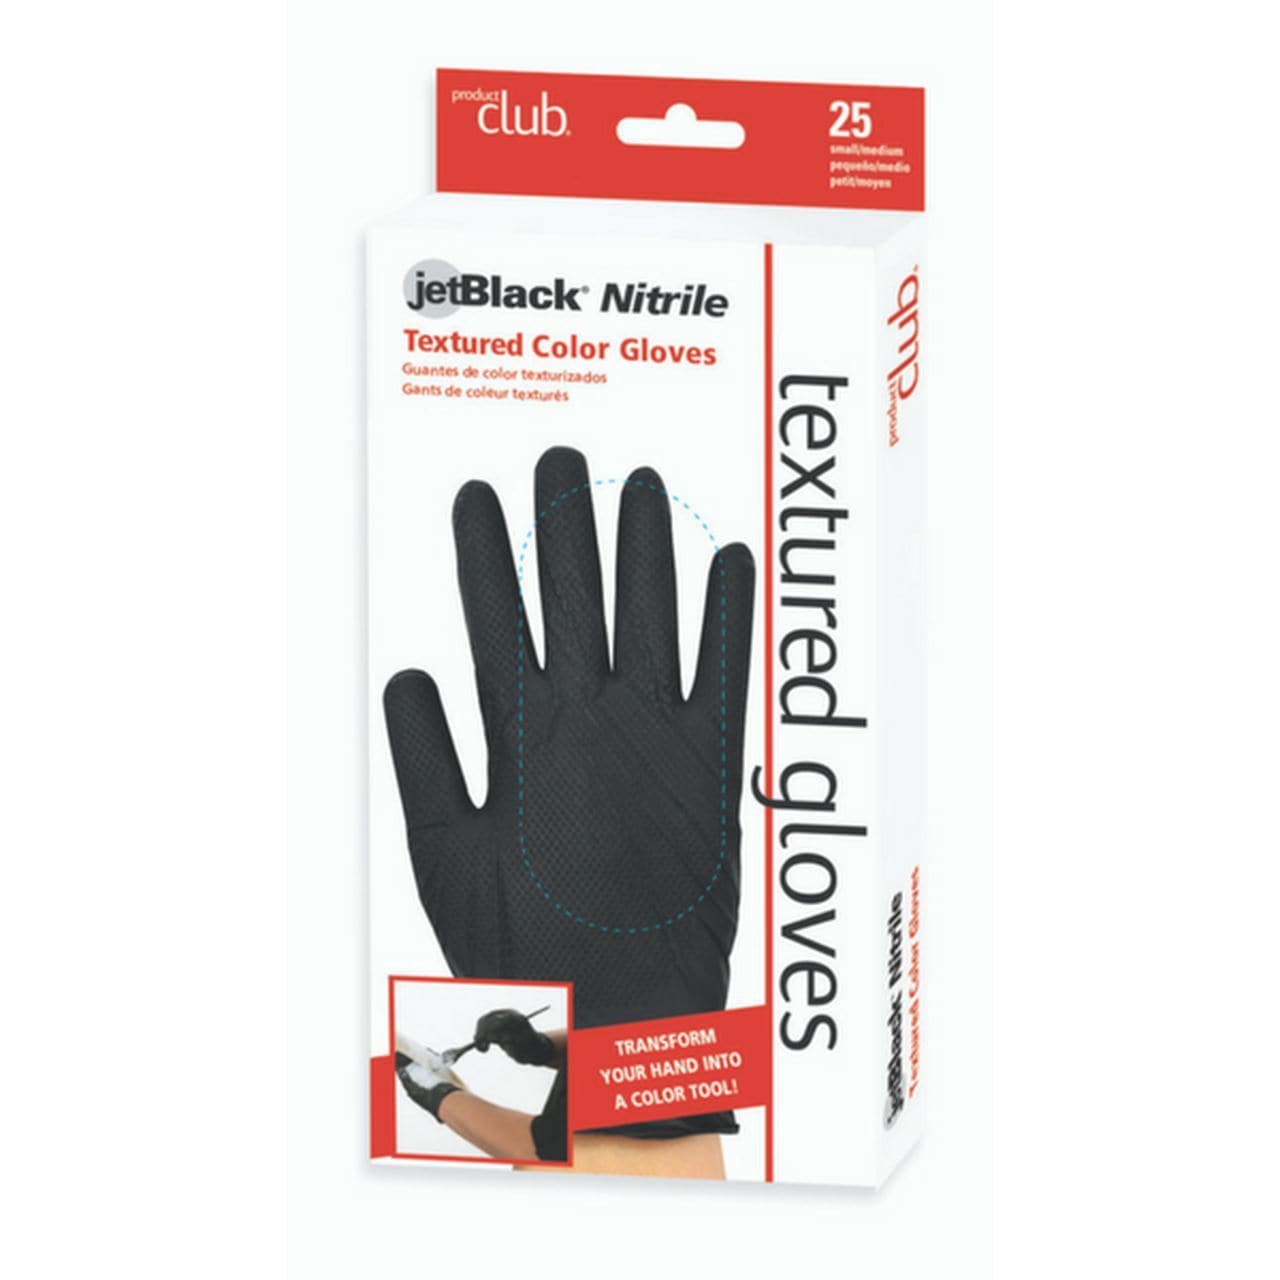 Jetblack Nitrile Textured Gloves | PRODUCT CLUB | SHSalons.com